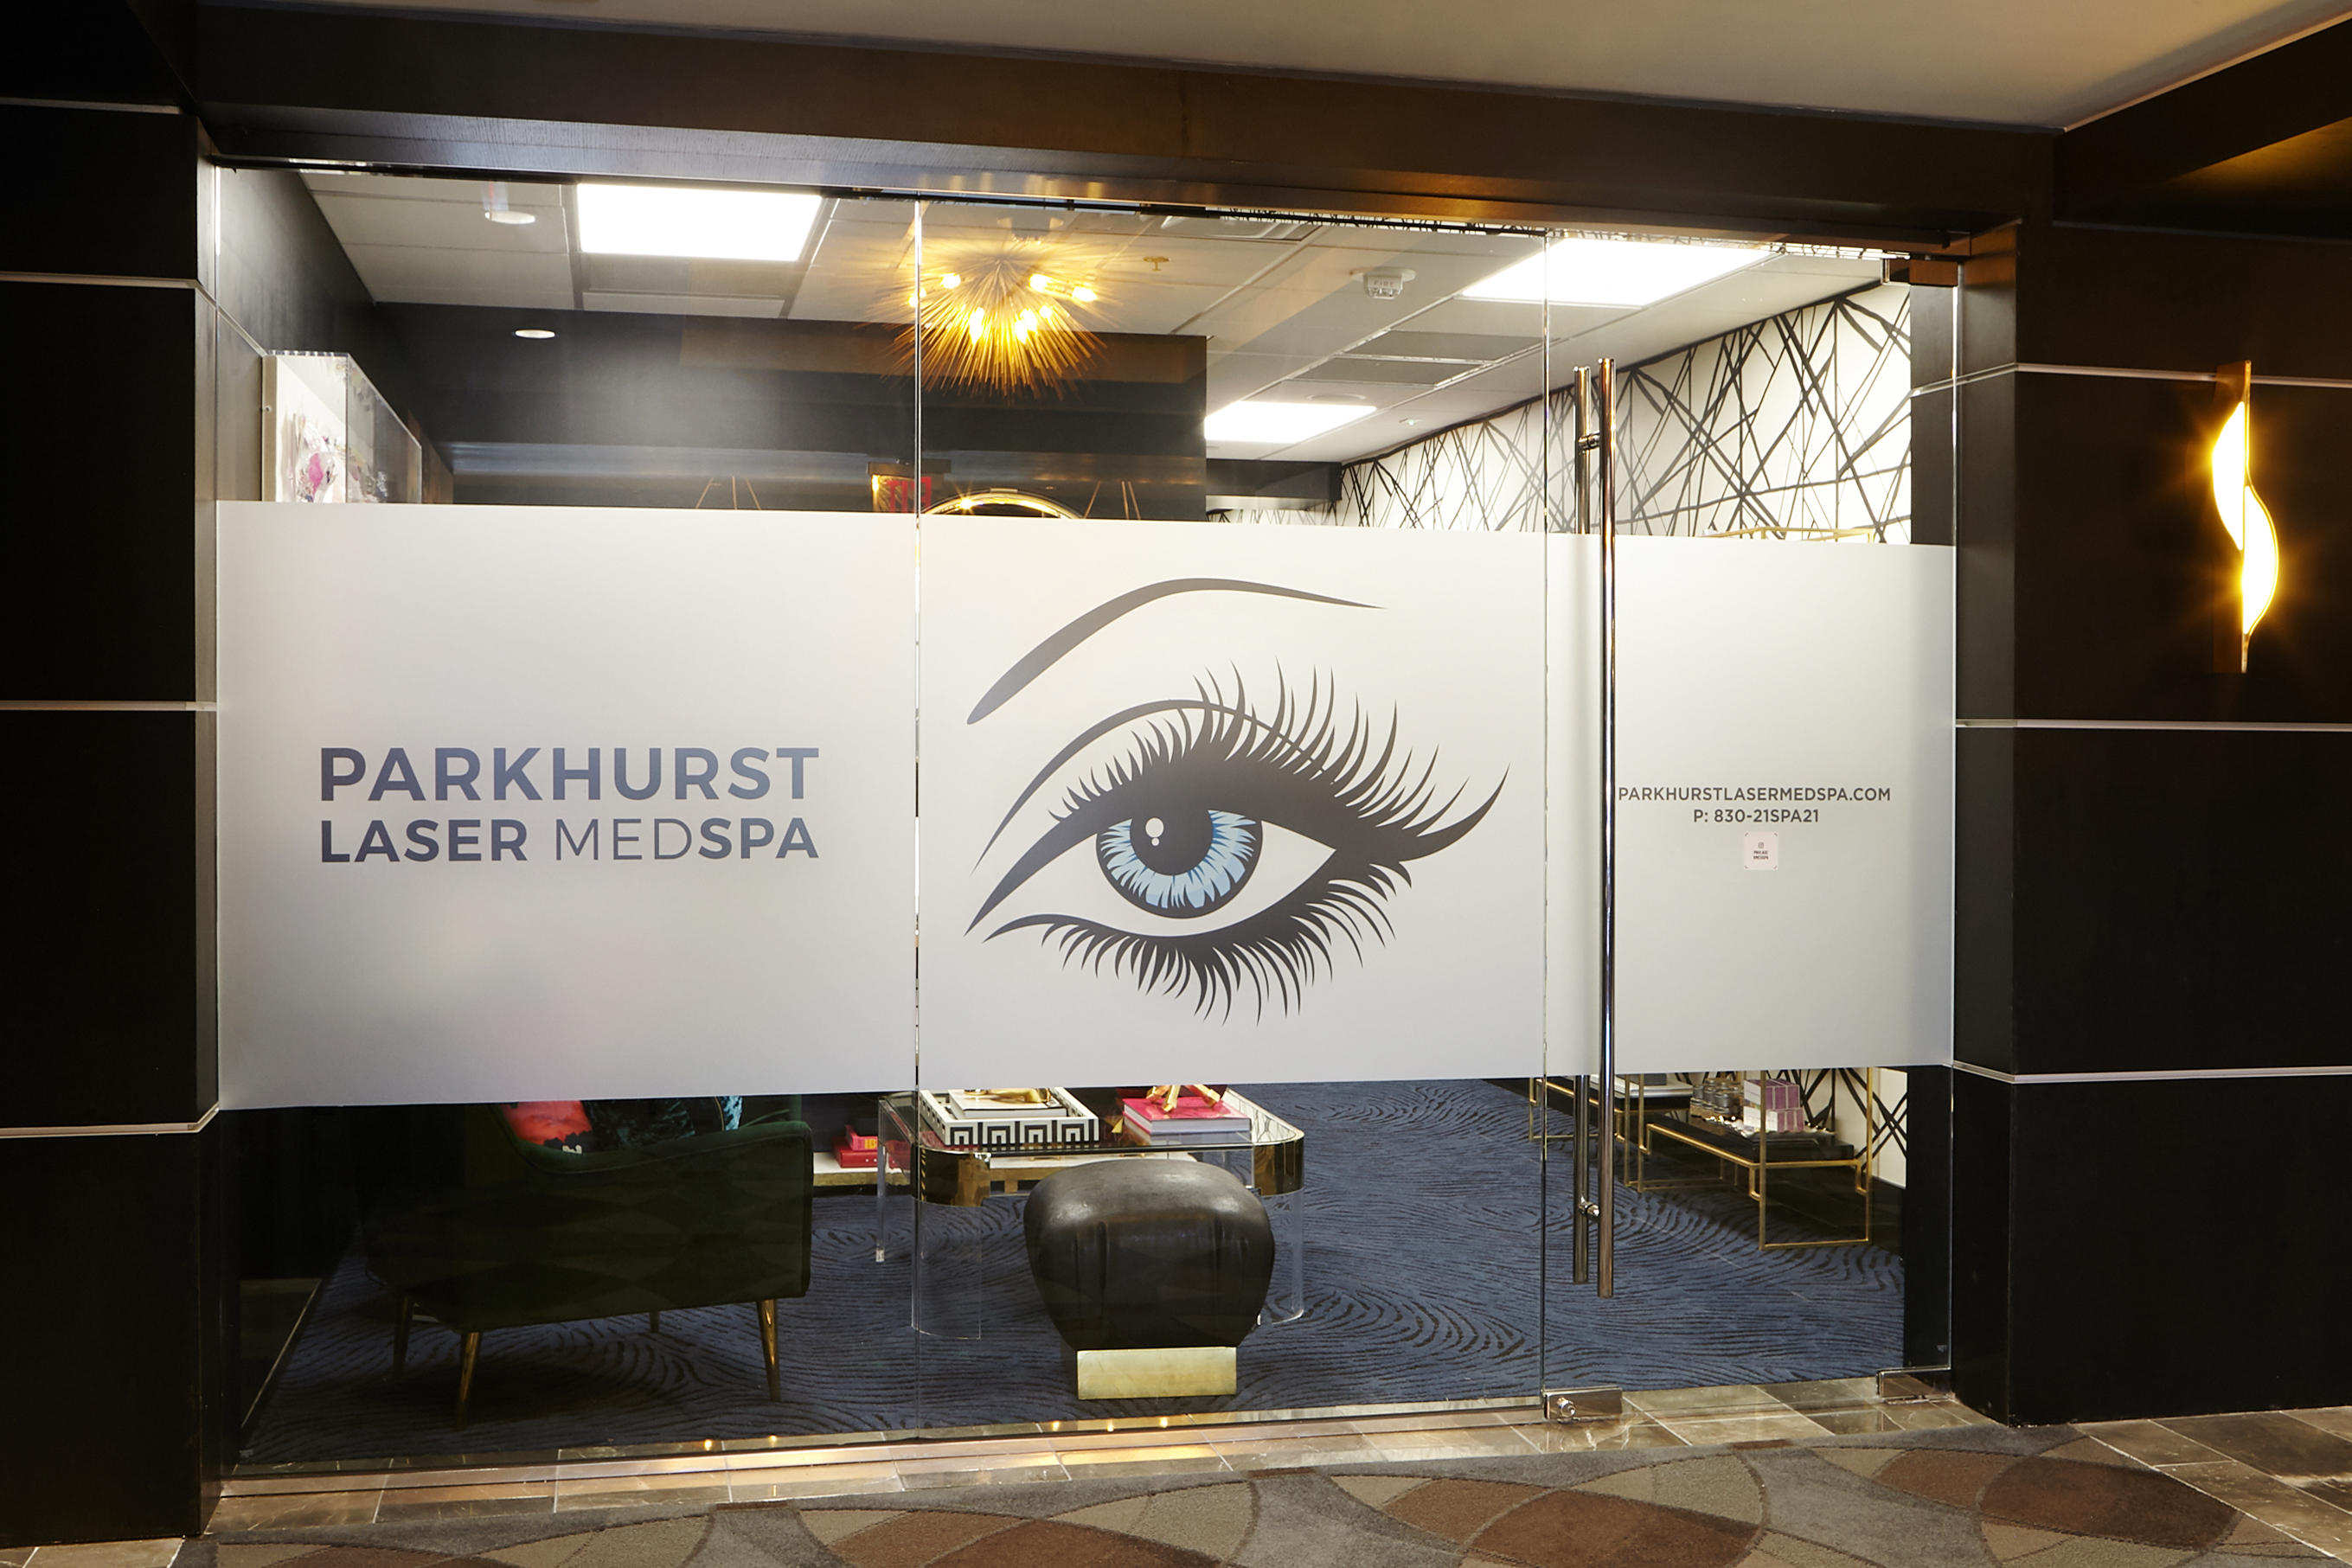 Parkhurst NuVision LASIK Eye Surgery San Antonio (210)851-9587